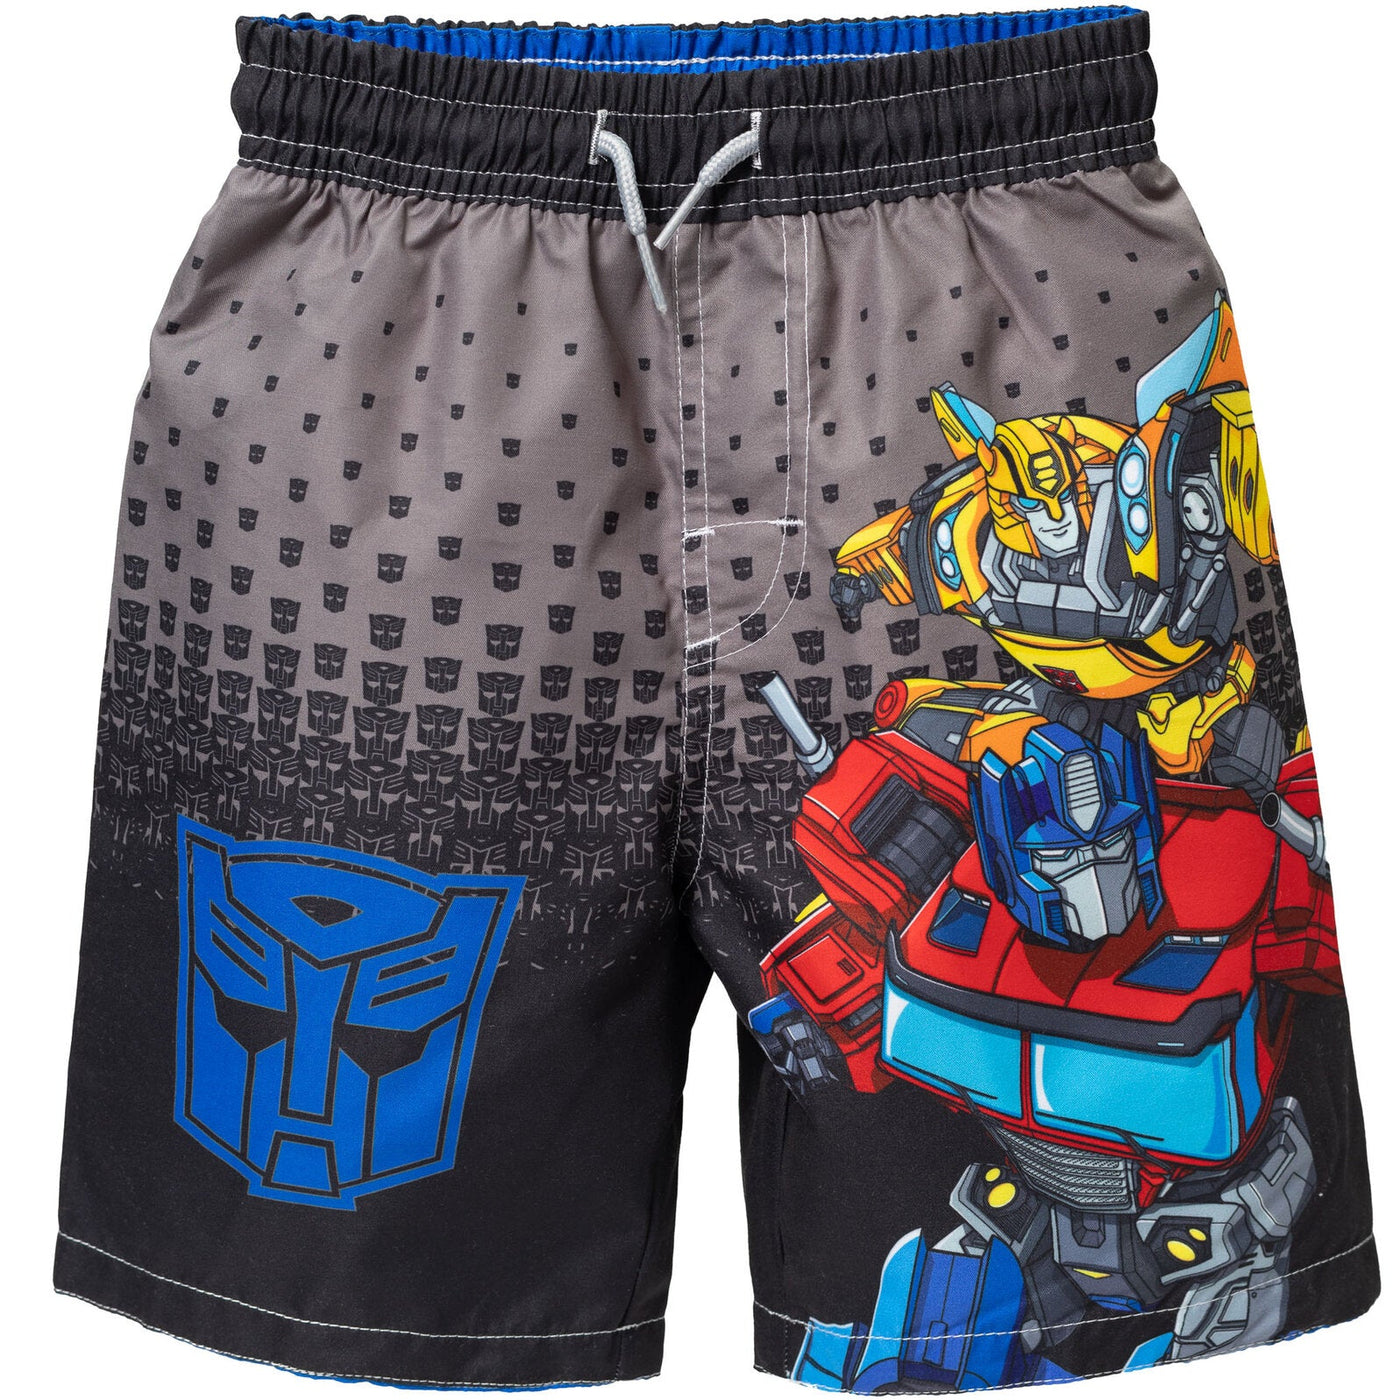 Transformers UPF 50+ Rash Guard Swim Trunks Outfit Set - imagikids